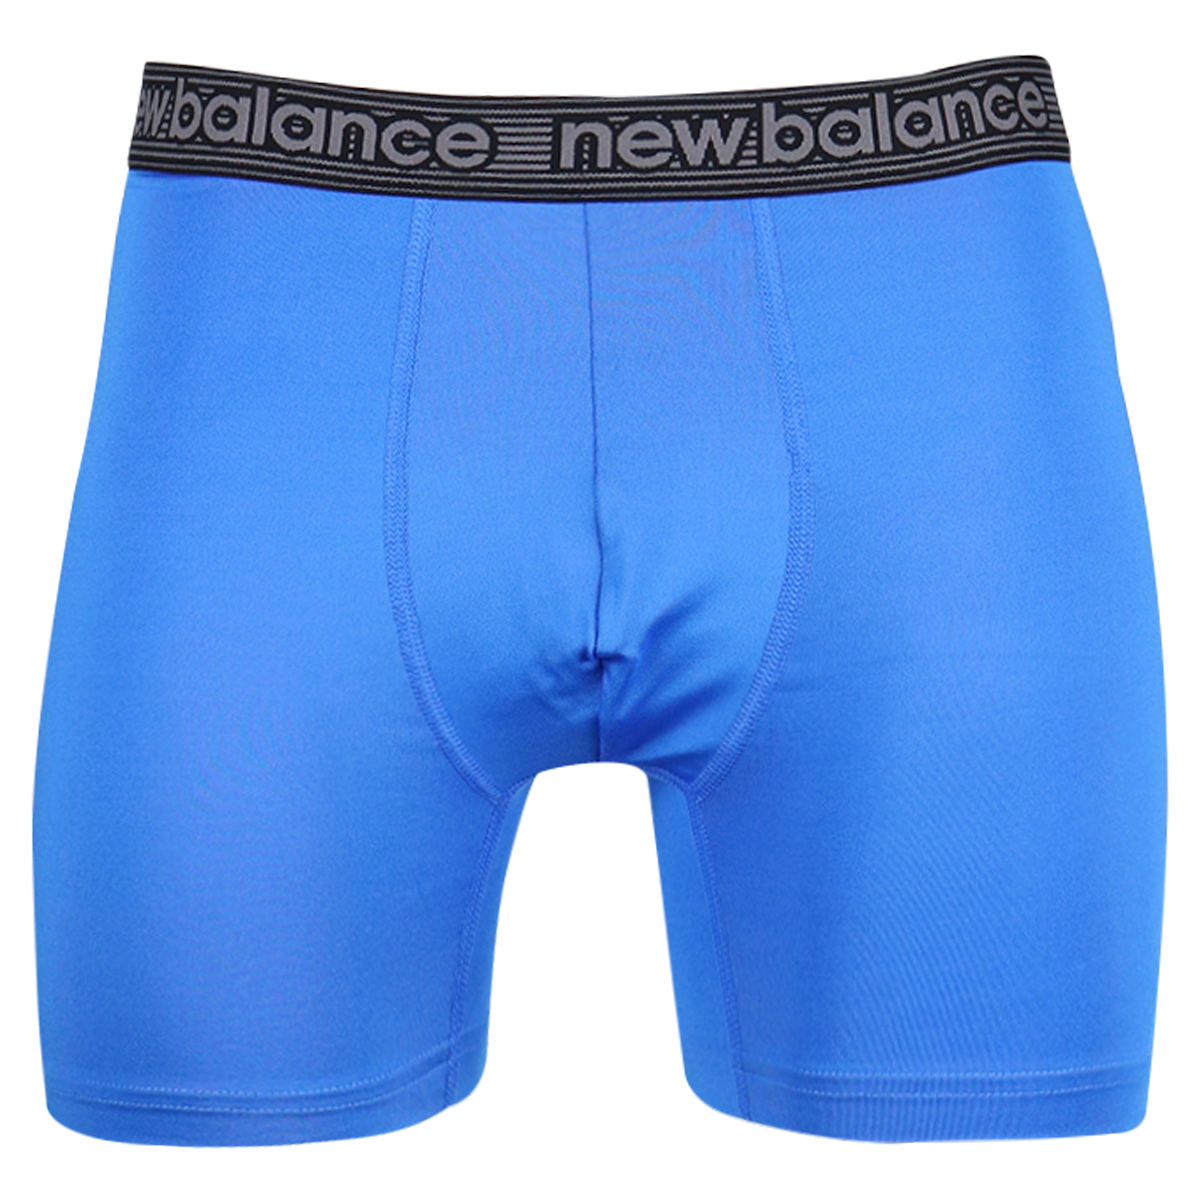 New Balance Men's Black, Navy, Bright Blue 4 Pack Boxer Brief (S04)